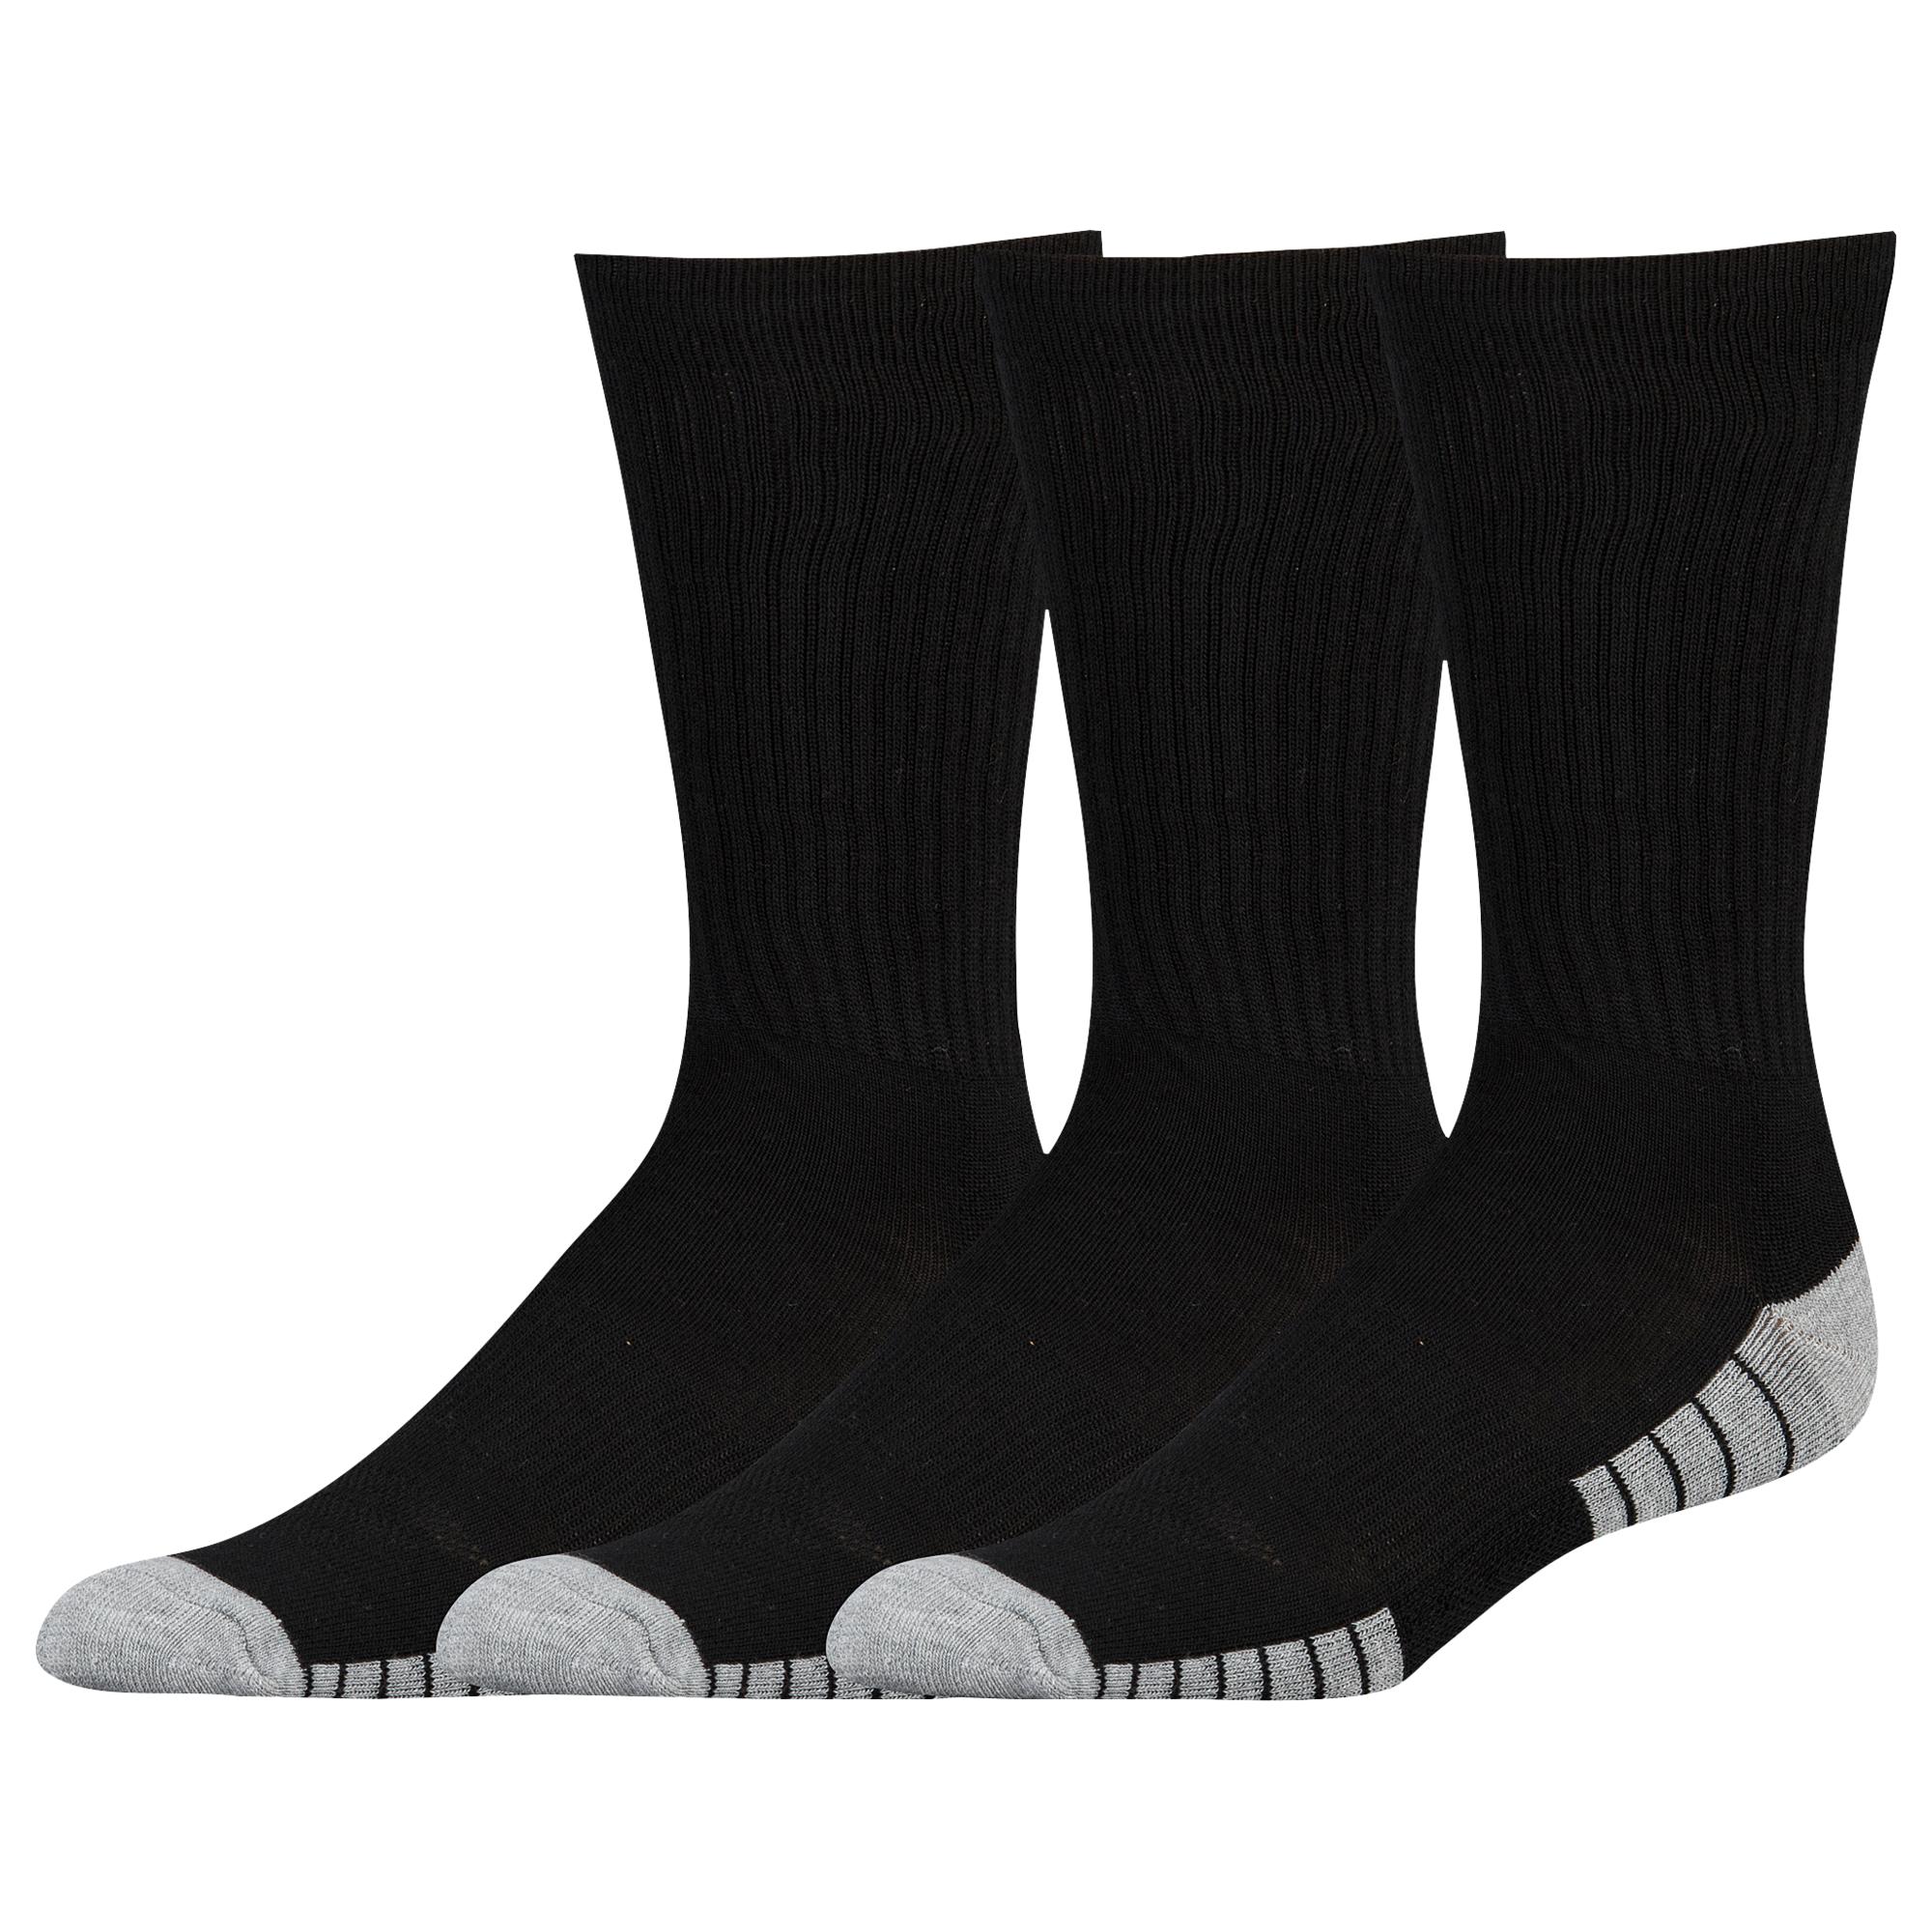 Under Armour Heatgear Tech 3 Pack Crew Socks in Black for Men - Lyst